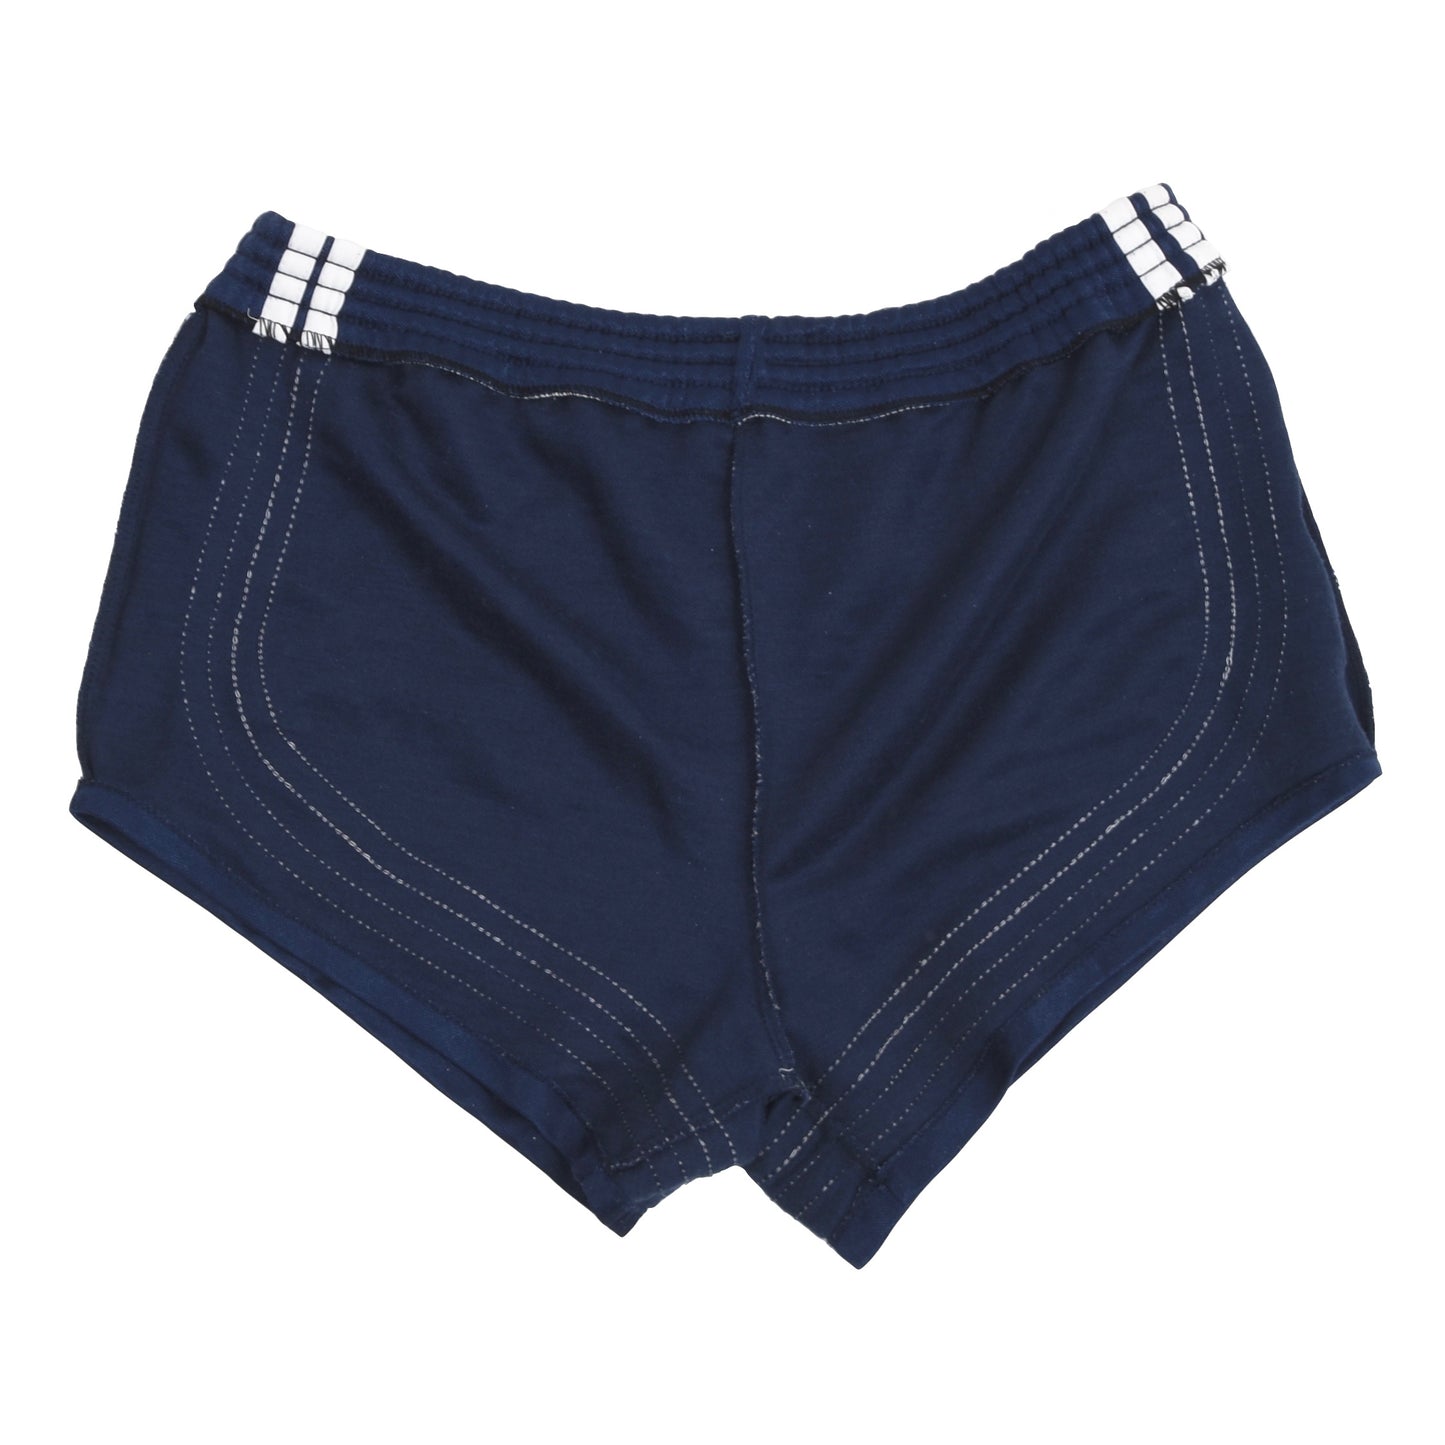 Vintage Gold's Gym Shorts - Navy Blue